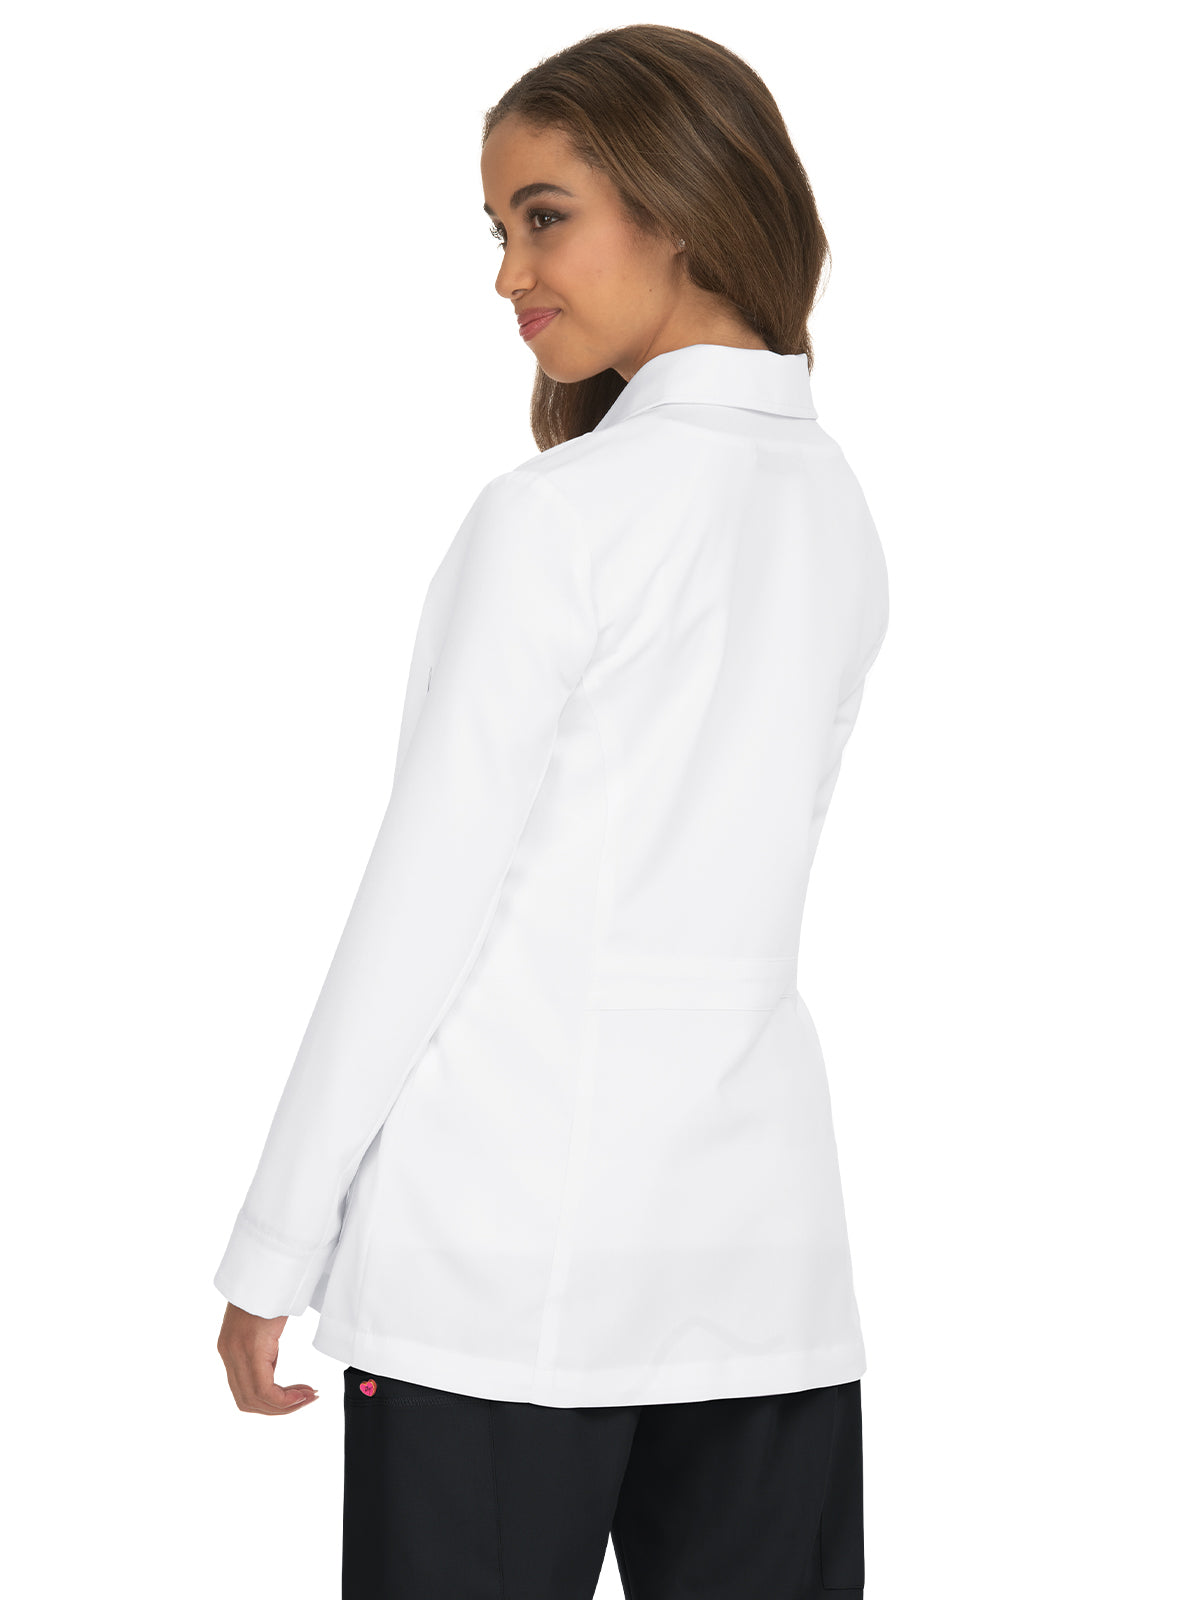 Women's Five-Pocket 29" Canna Lab Coat - B402 - White